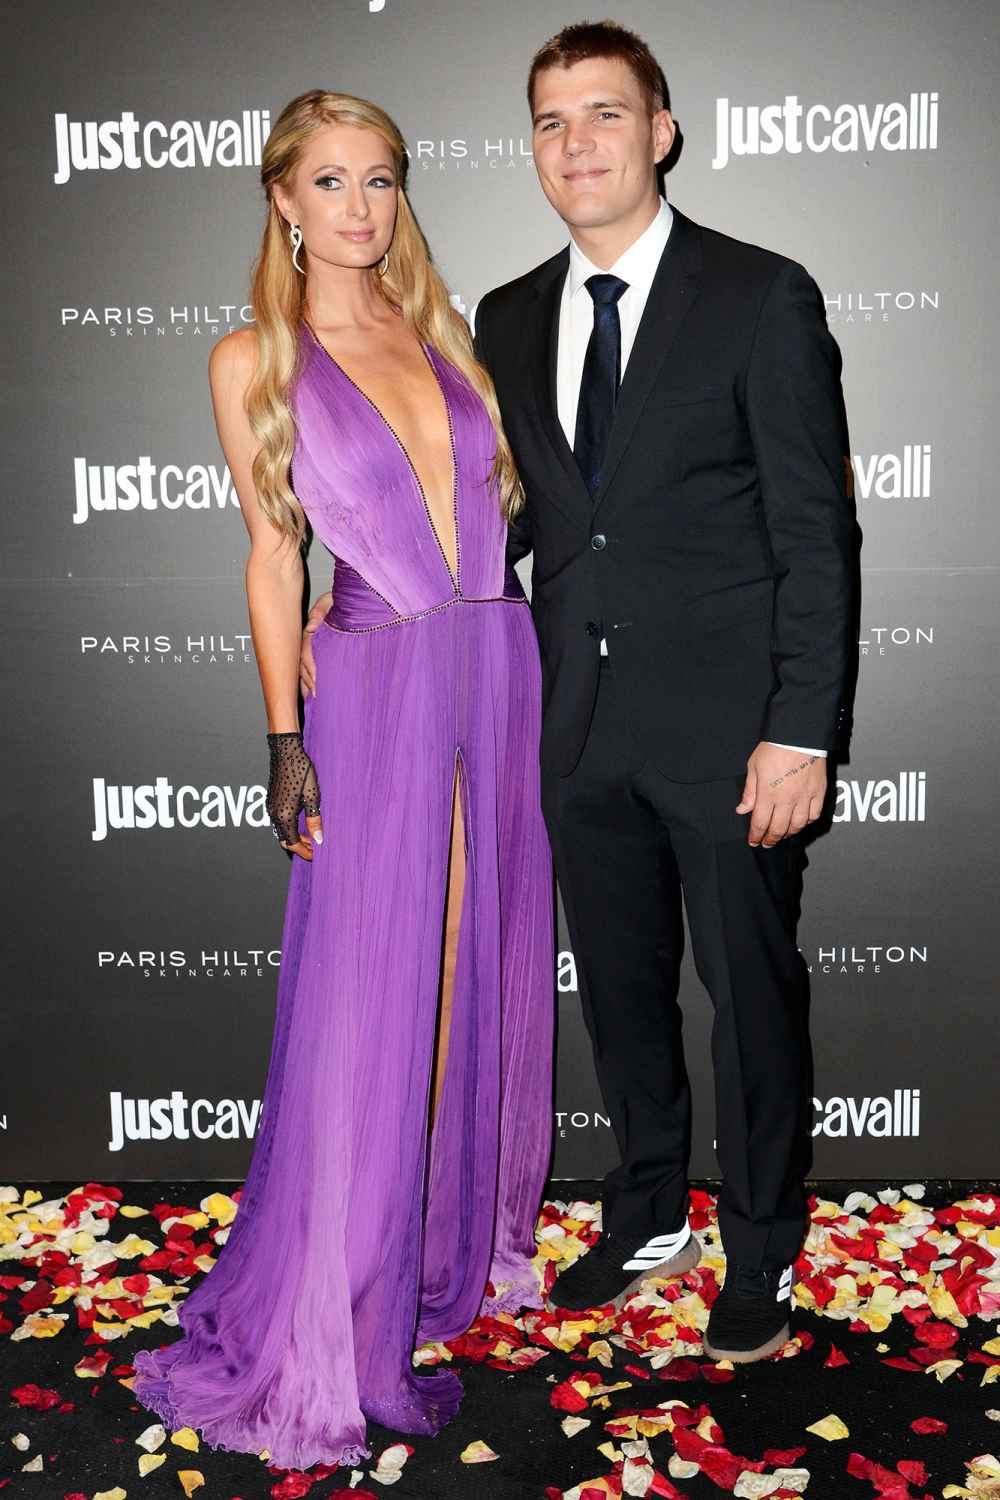 Paris Hilton and Chris Zylka Just Cavalli Paris Hilton Skincare Event Purple Dress